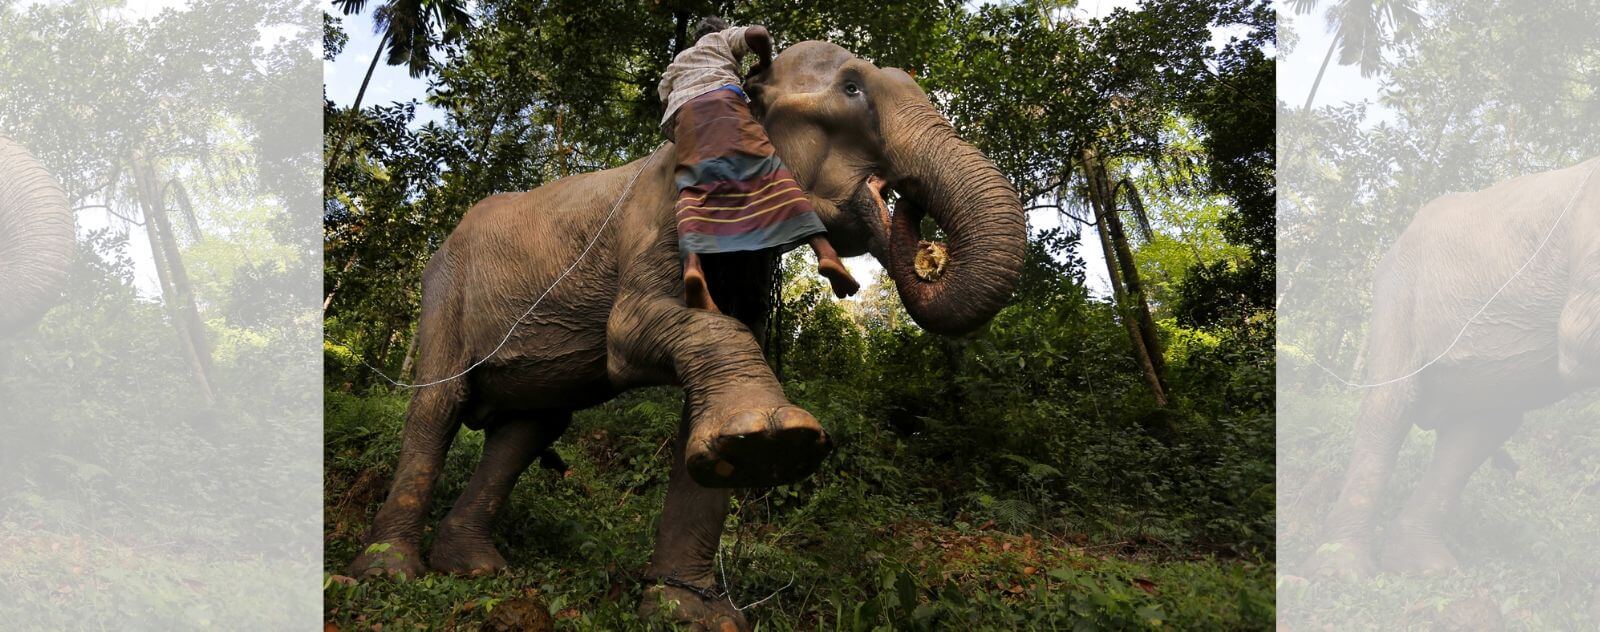 Human Use of Elephants